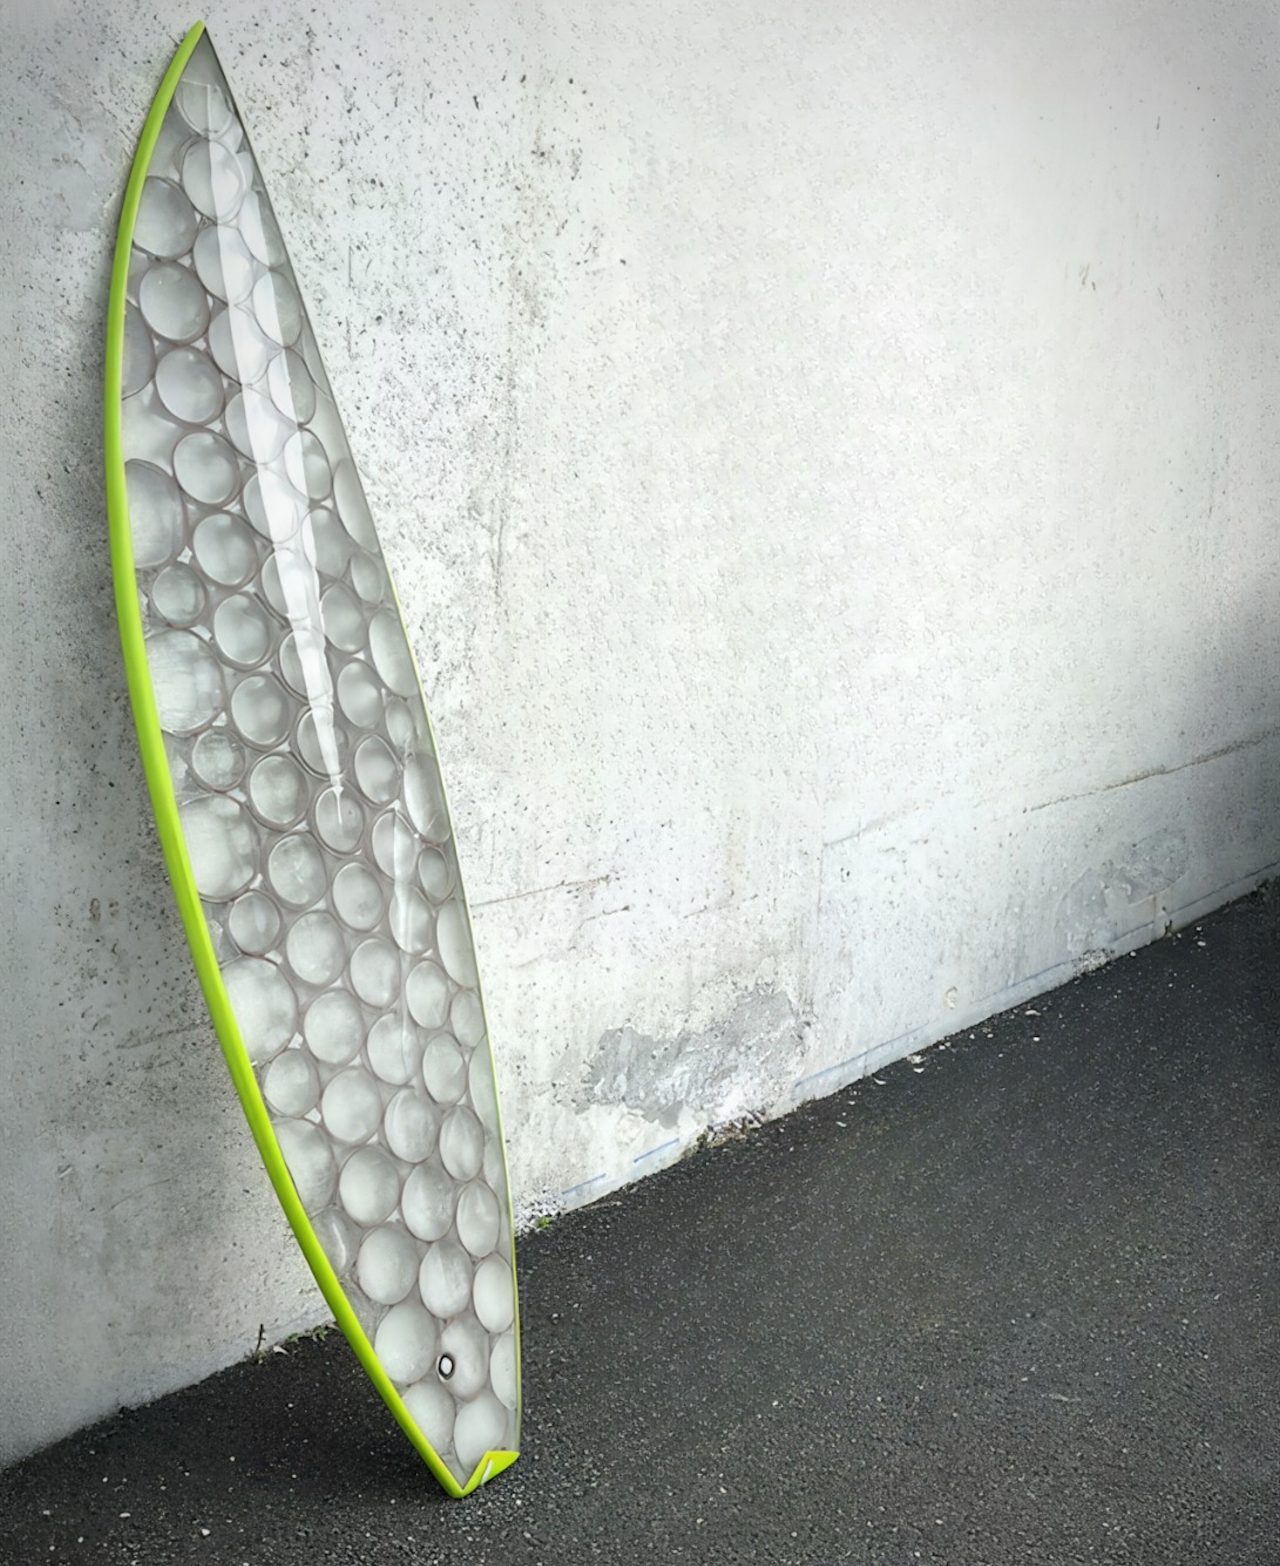 Algea-based 3D-printed surfboard